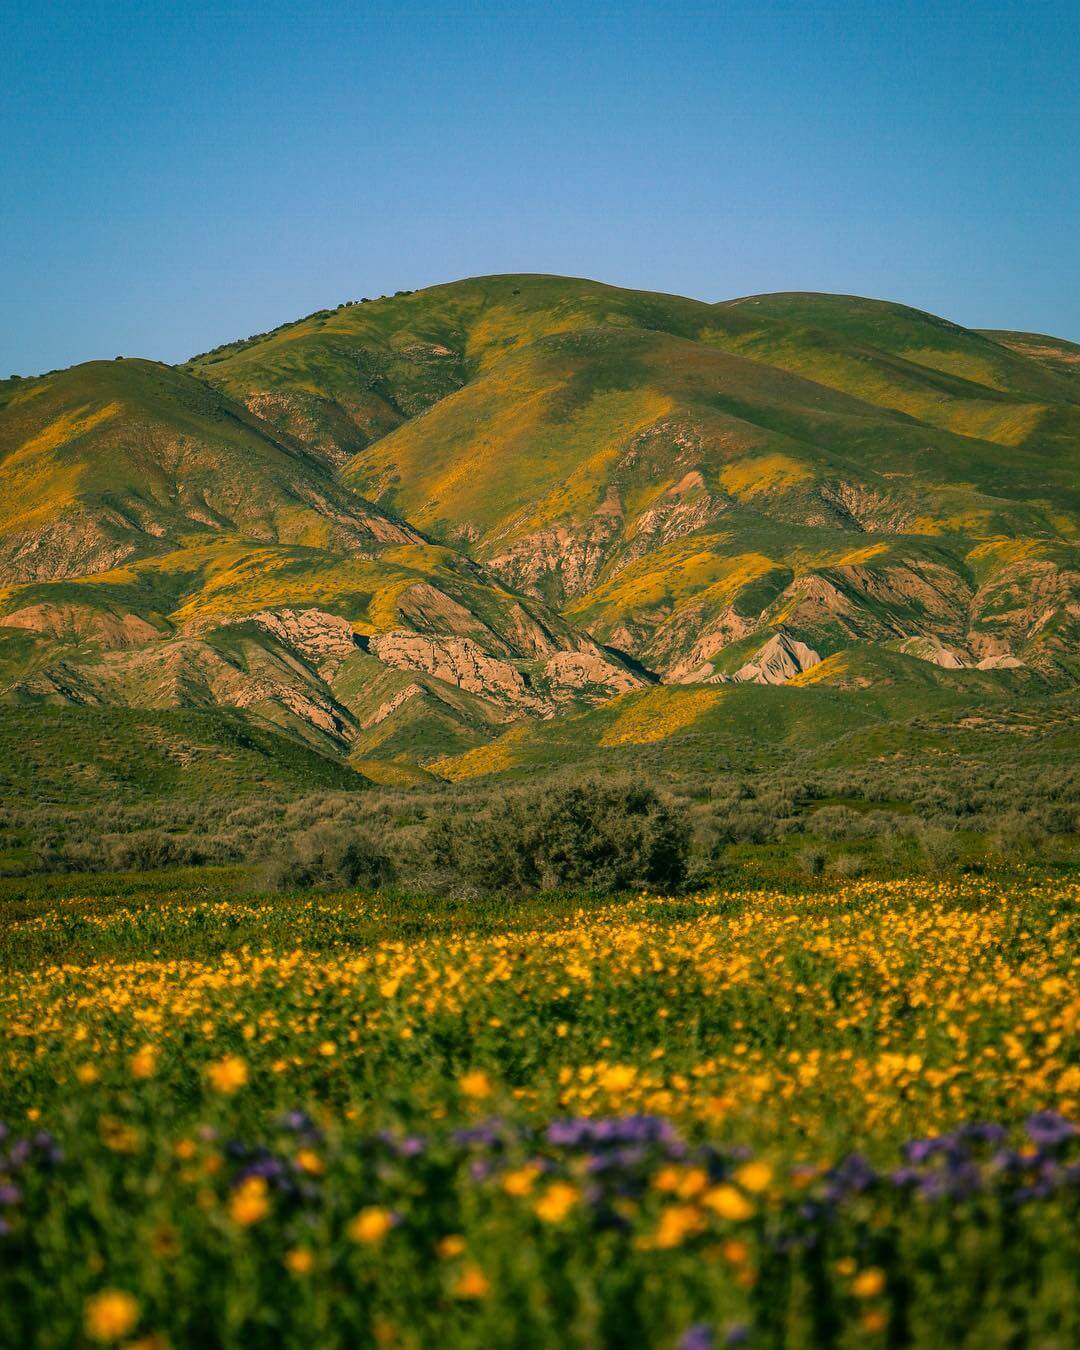 San Luis Obispo Wildflower Superbloom 2019